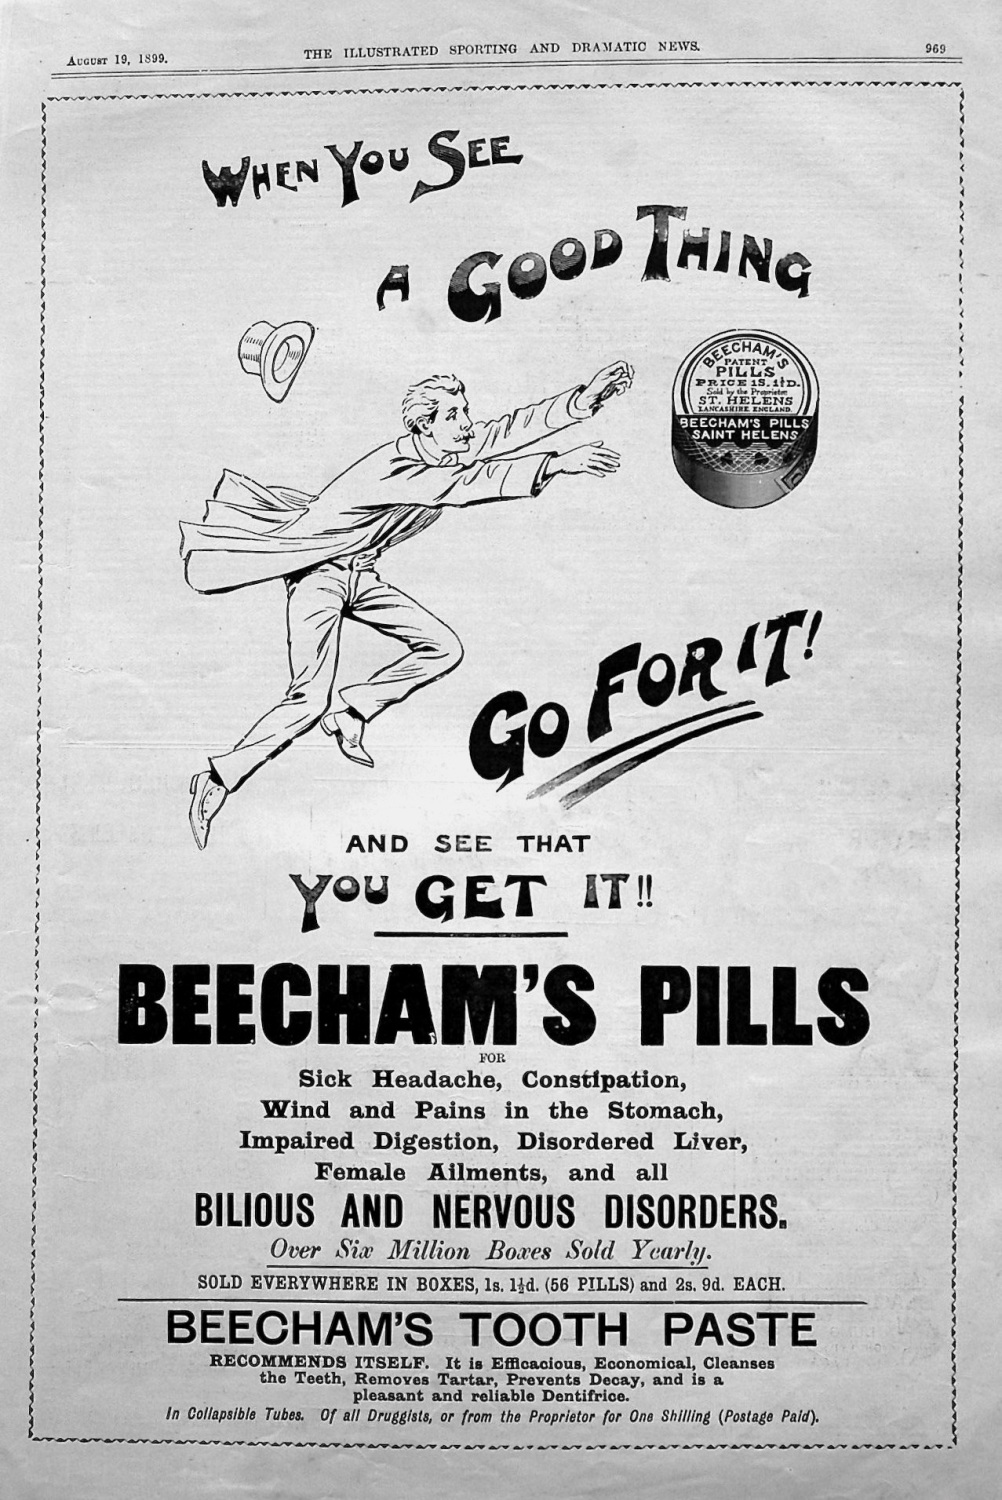 Beecham's Pills. August 1899